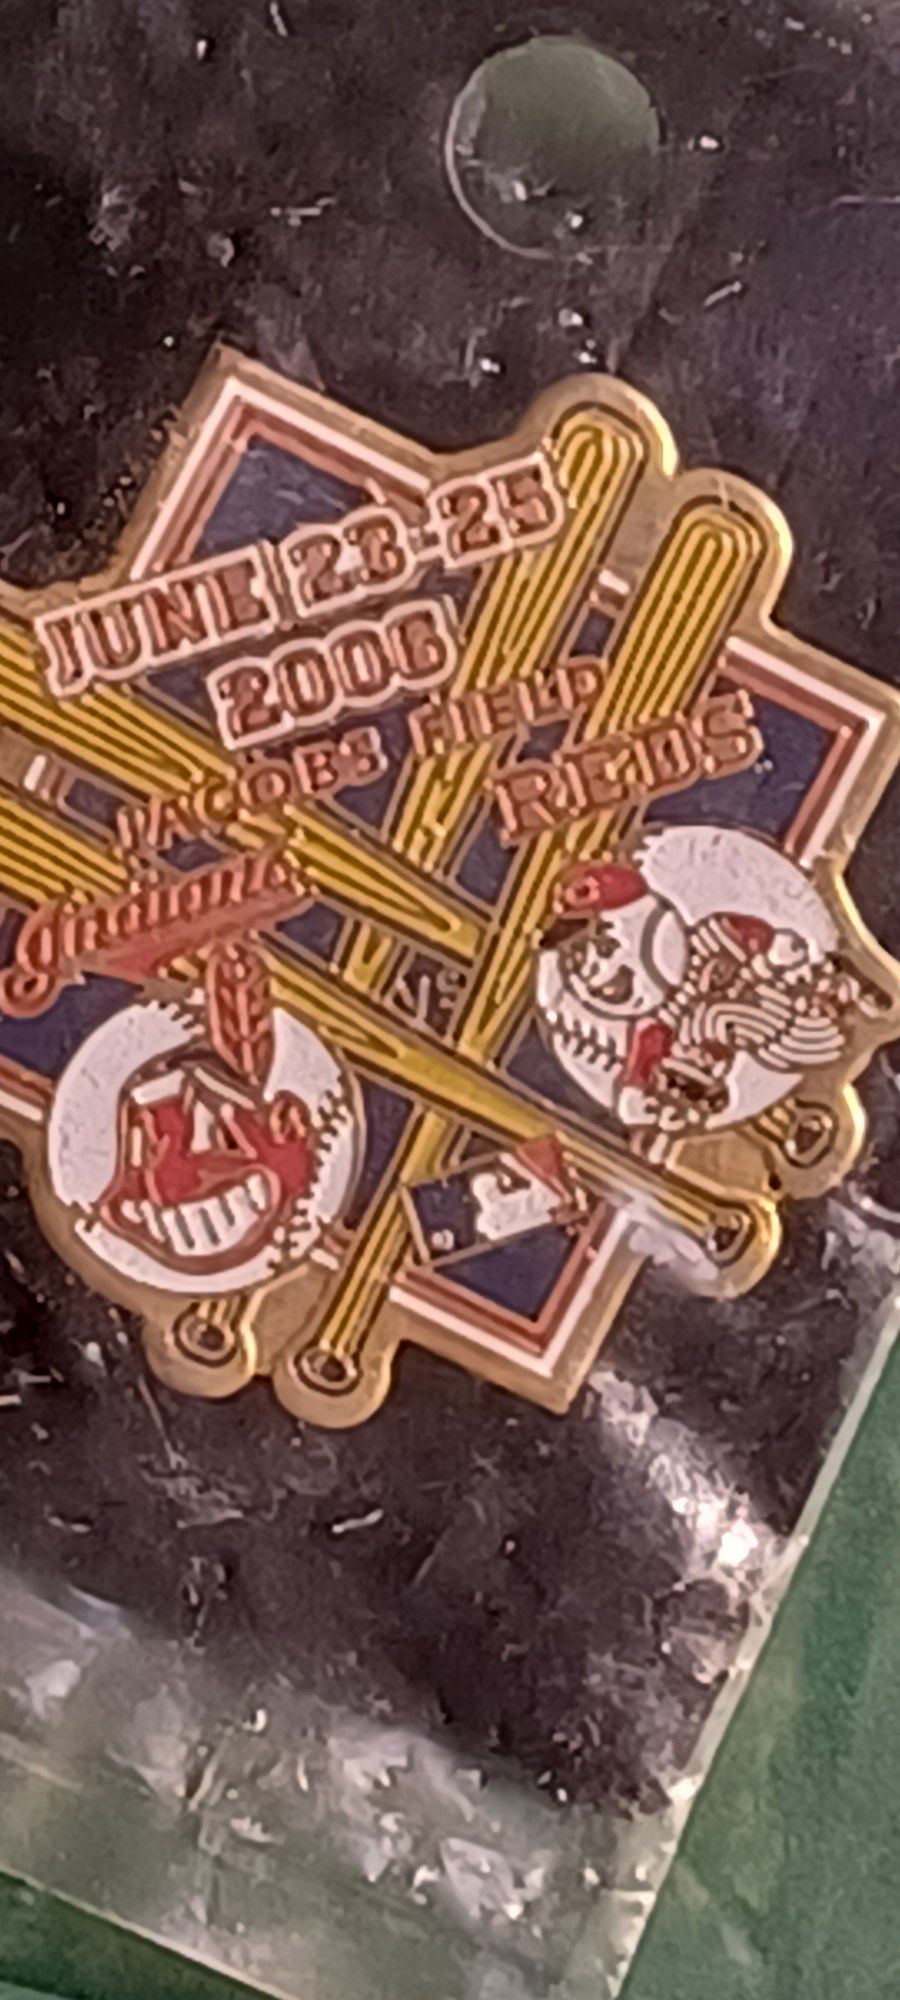 Cleveland Indians Cincinnati Reds Jacobs Field 2006 Badge PIN Button.